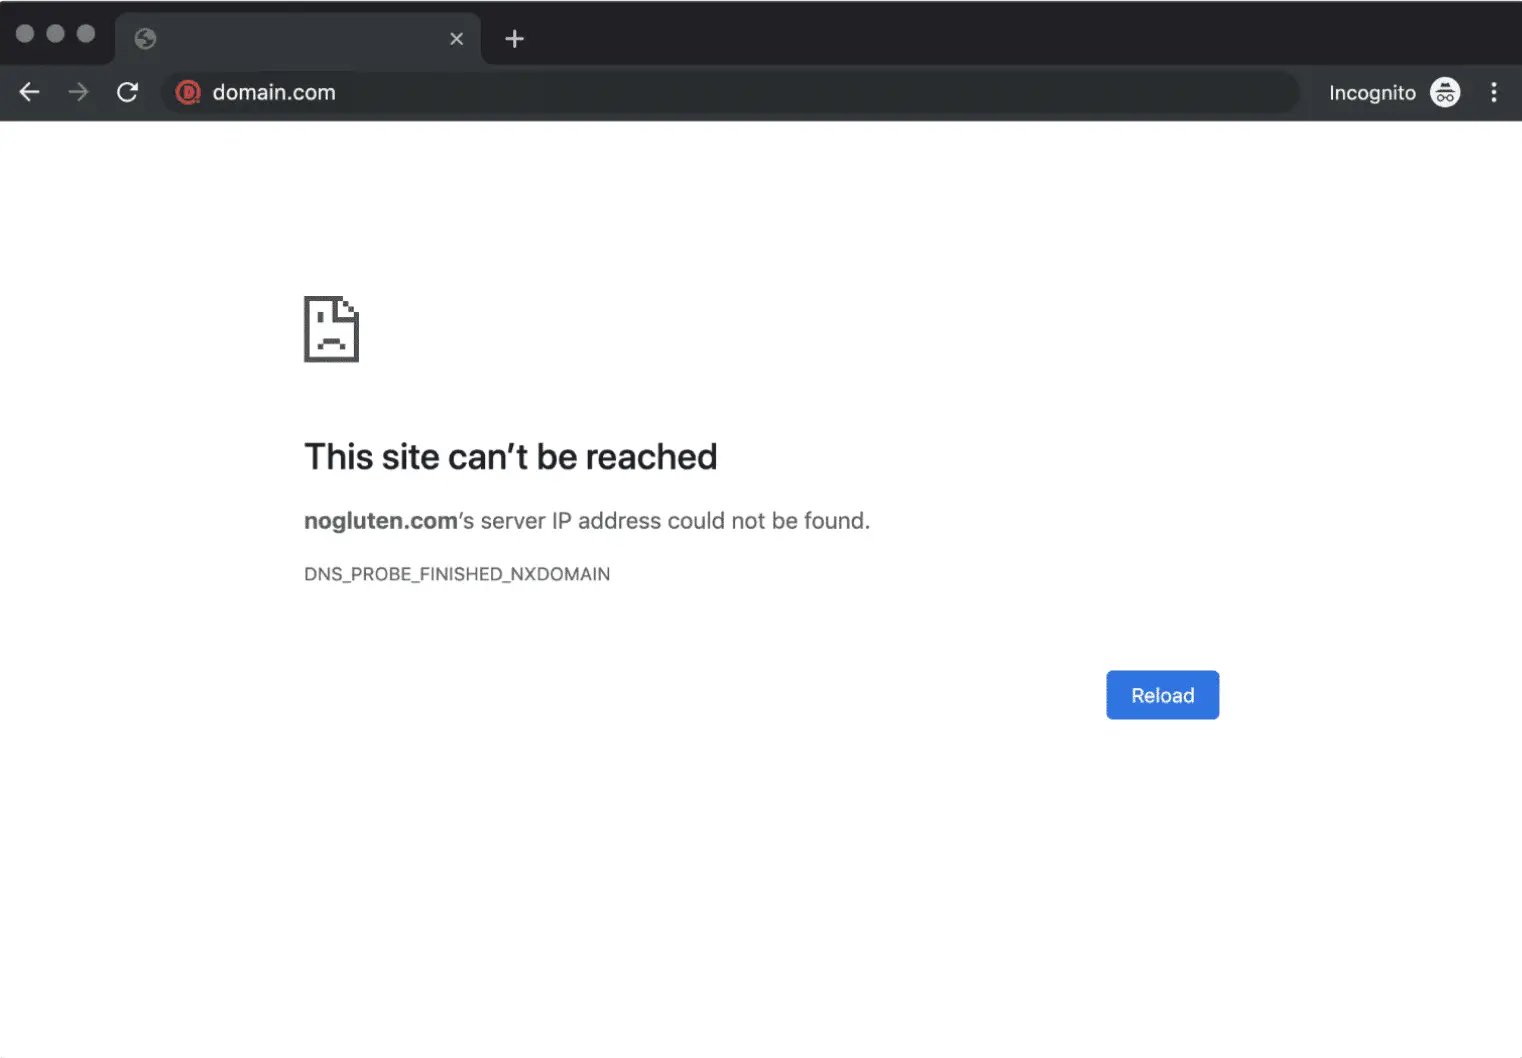 DNS_PROBE_FINISHED_NXDOMAIN error in Google Chrome